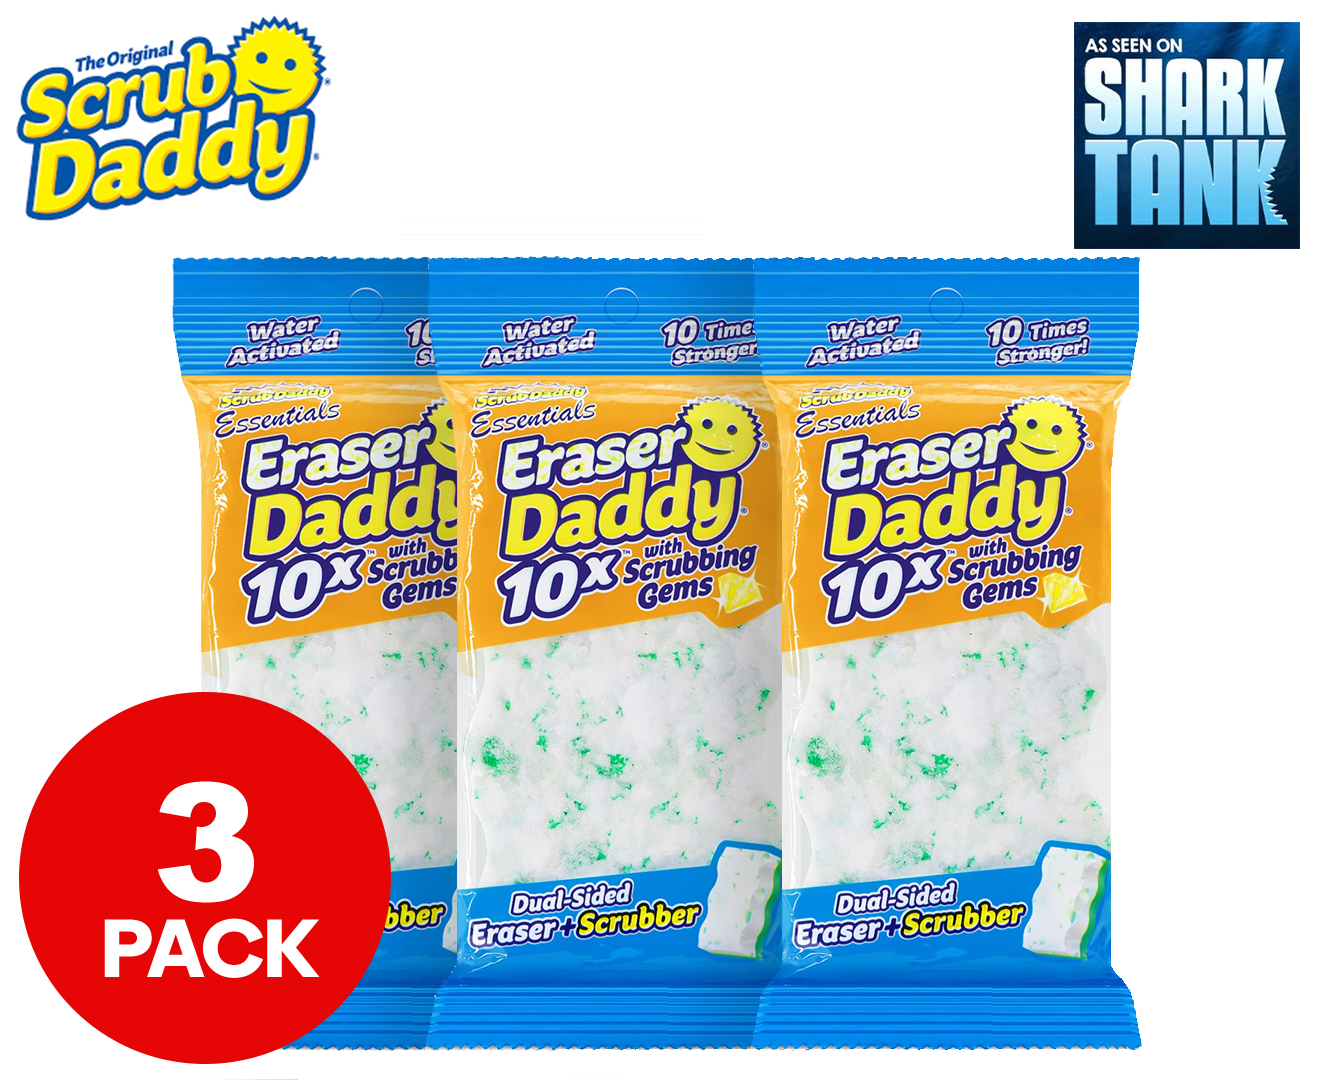 Scrub Daddy Eraser Sponge - Eraser Daddy 10x with Scrubbing Gems